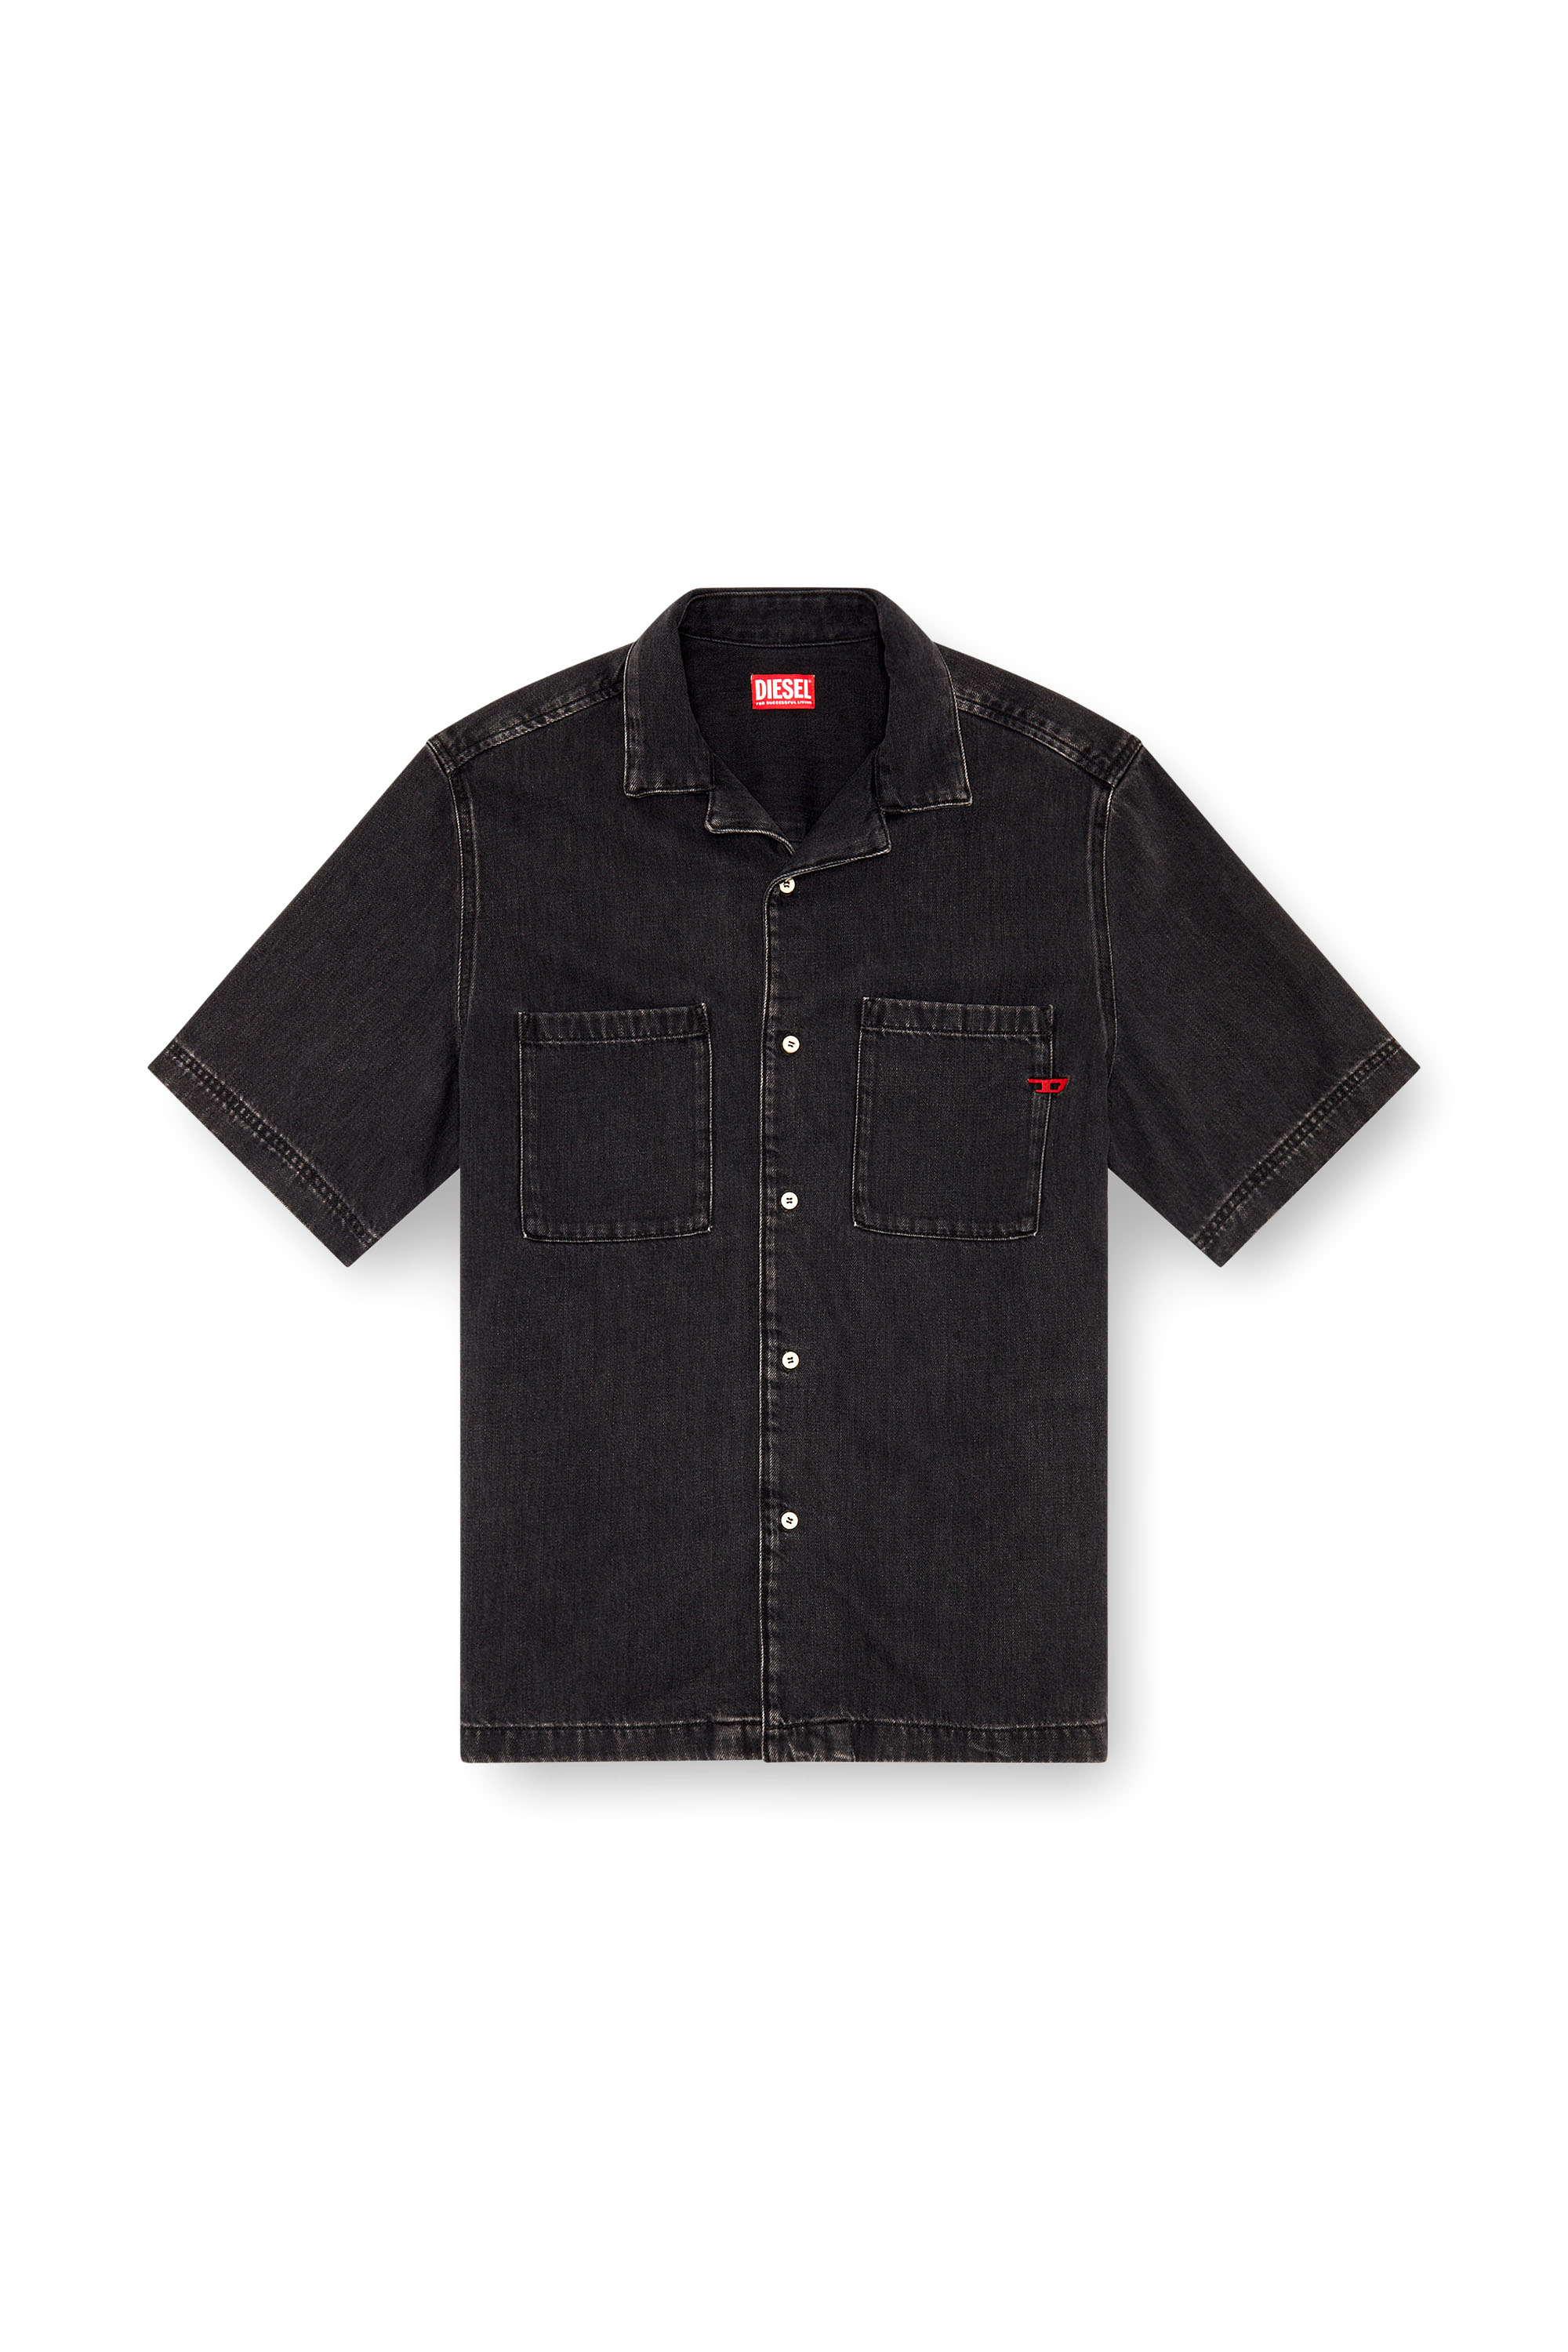 Diesel - D-PAROSHORT, Male Bowling shirt in Tencel denim in ブラック - Image 3